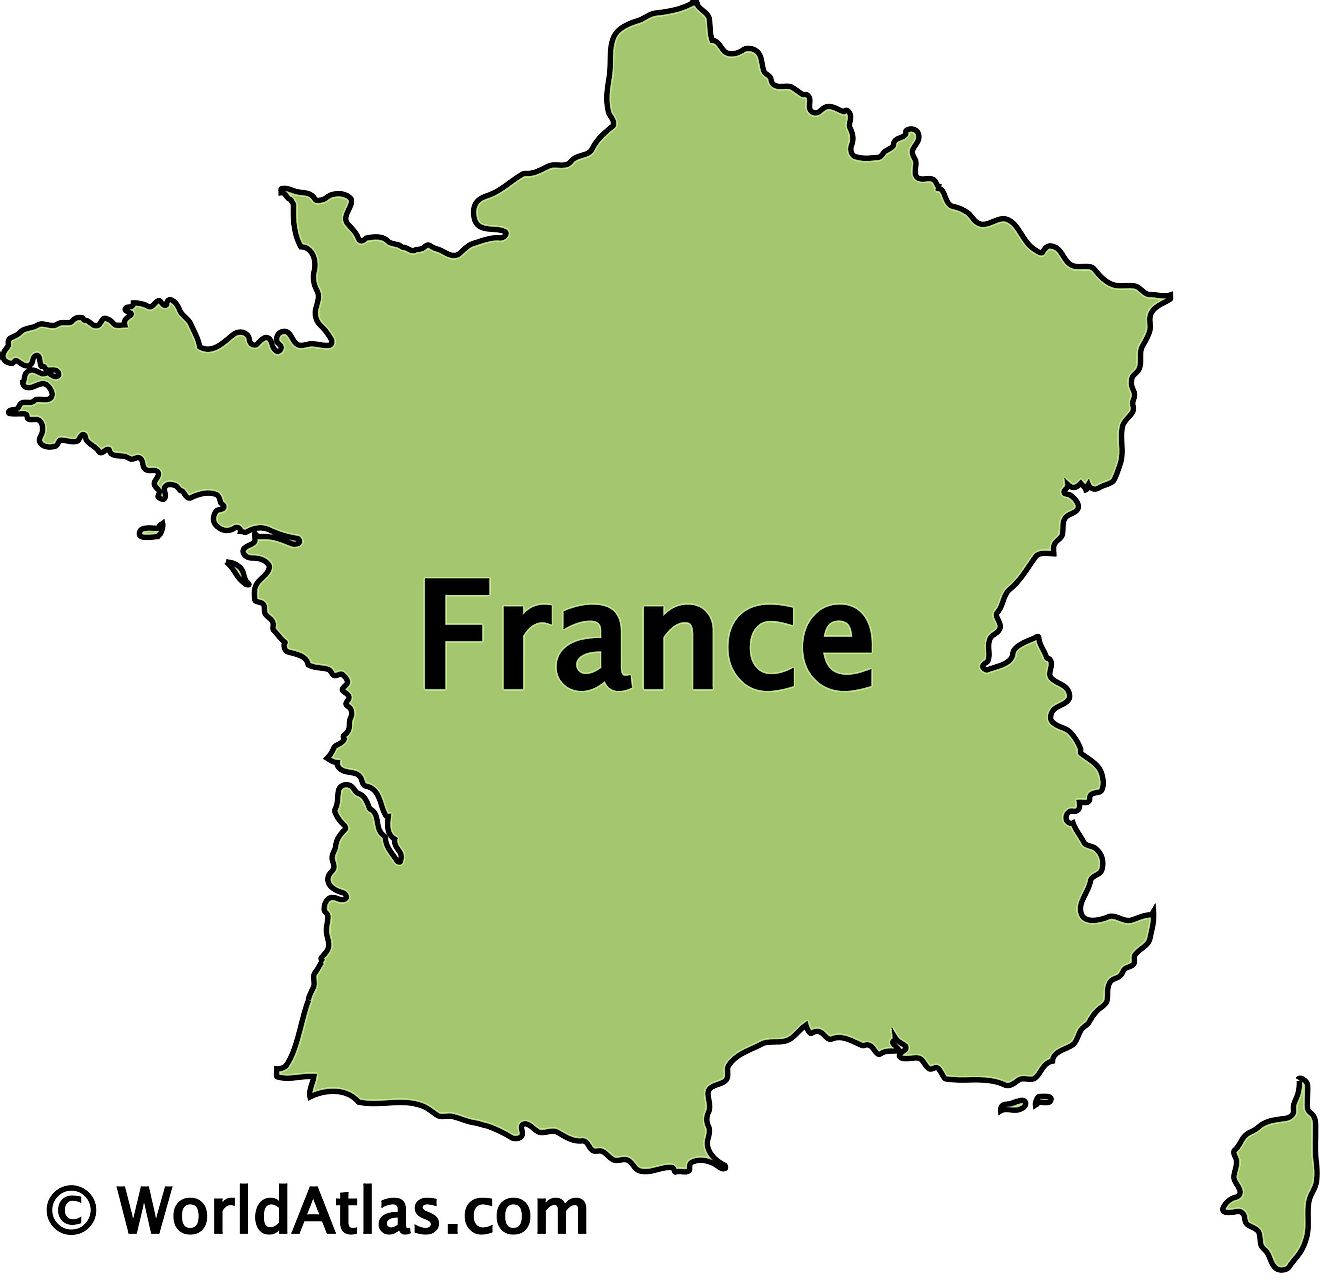 Outline Map of France